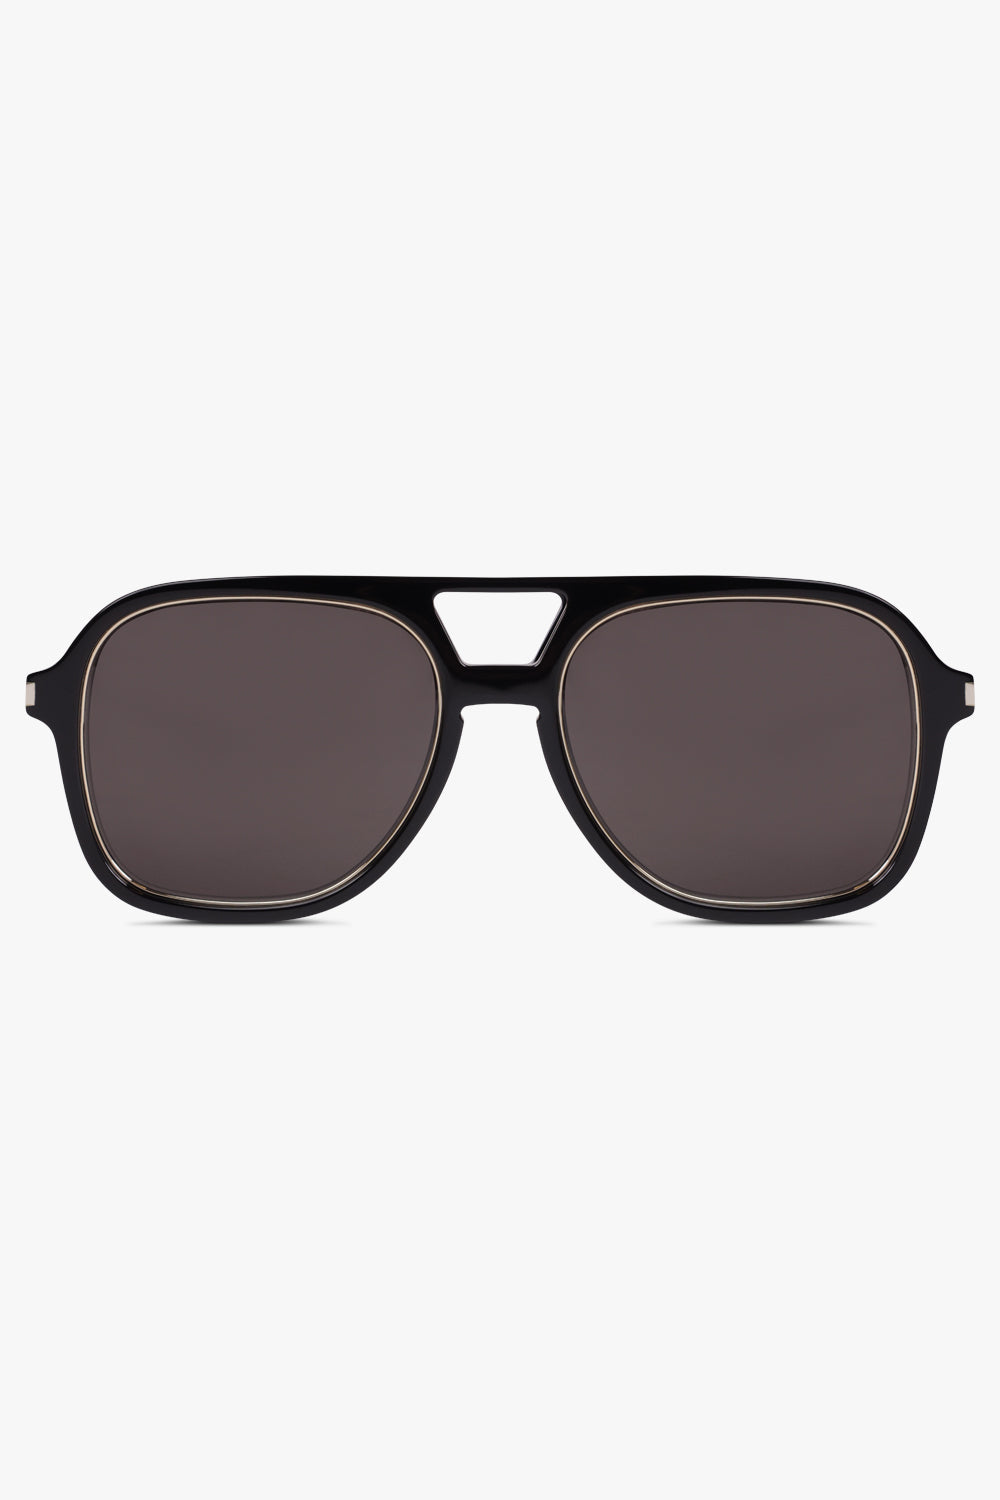 SAINT LAURENT ACCESSORIES Black Rim 602 Sunglasses | Black/Light Gold